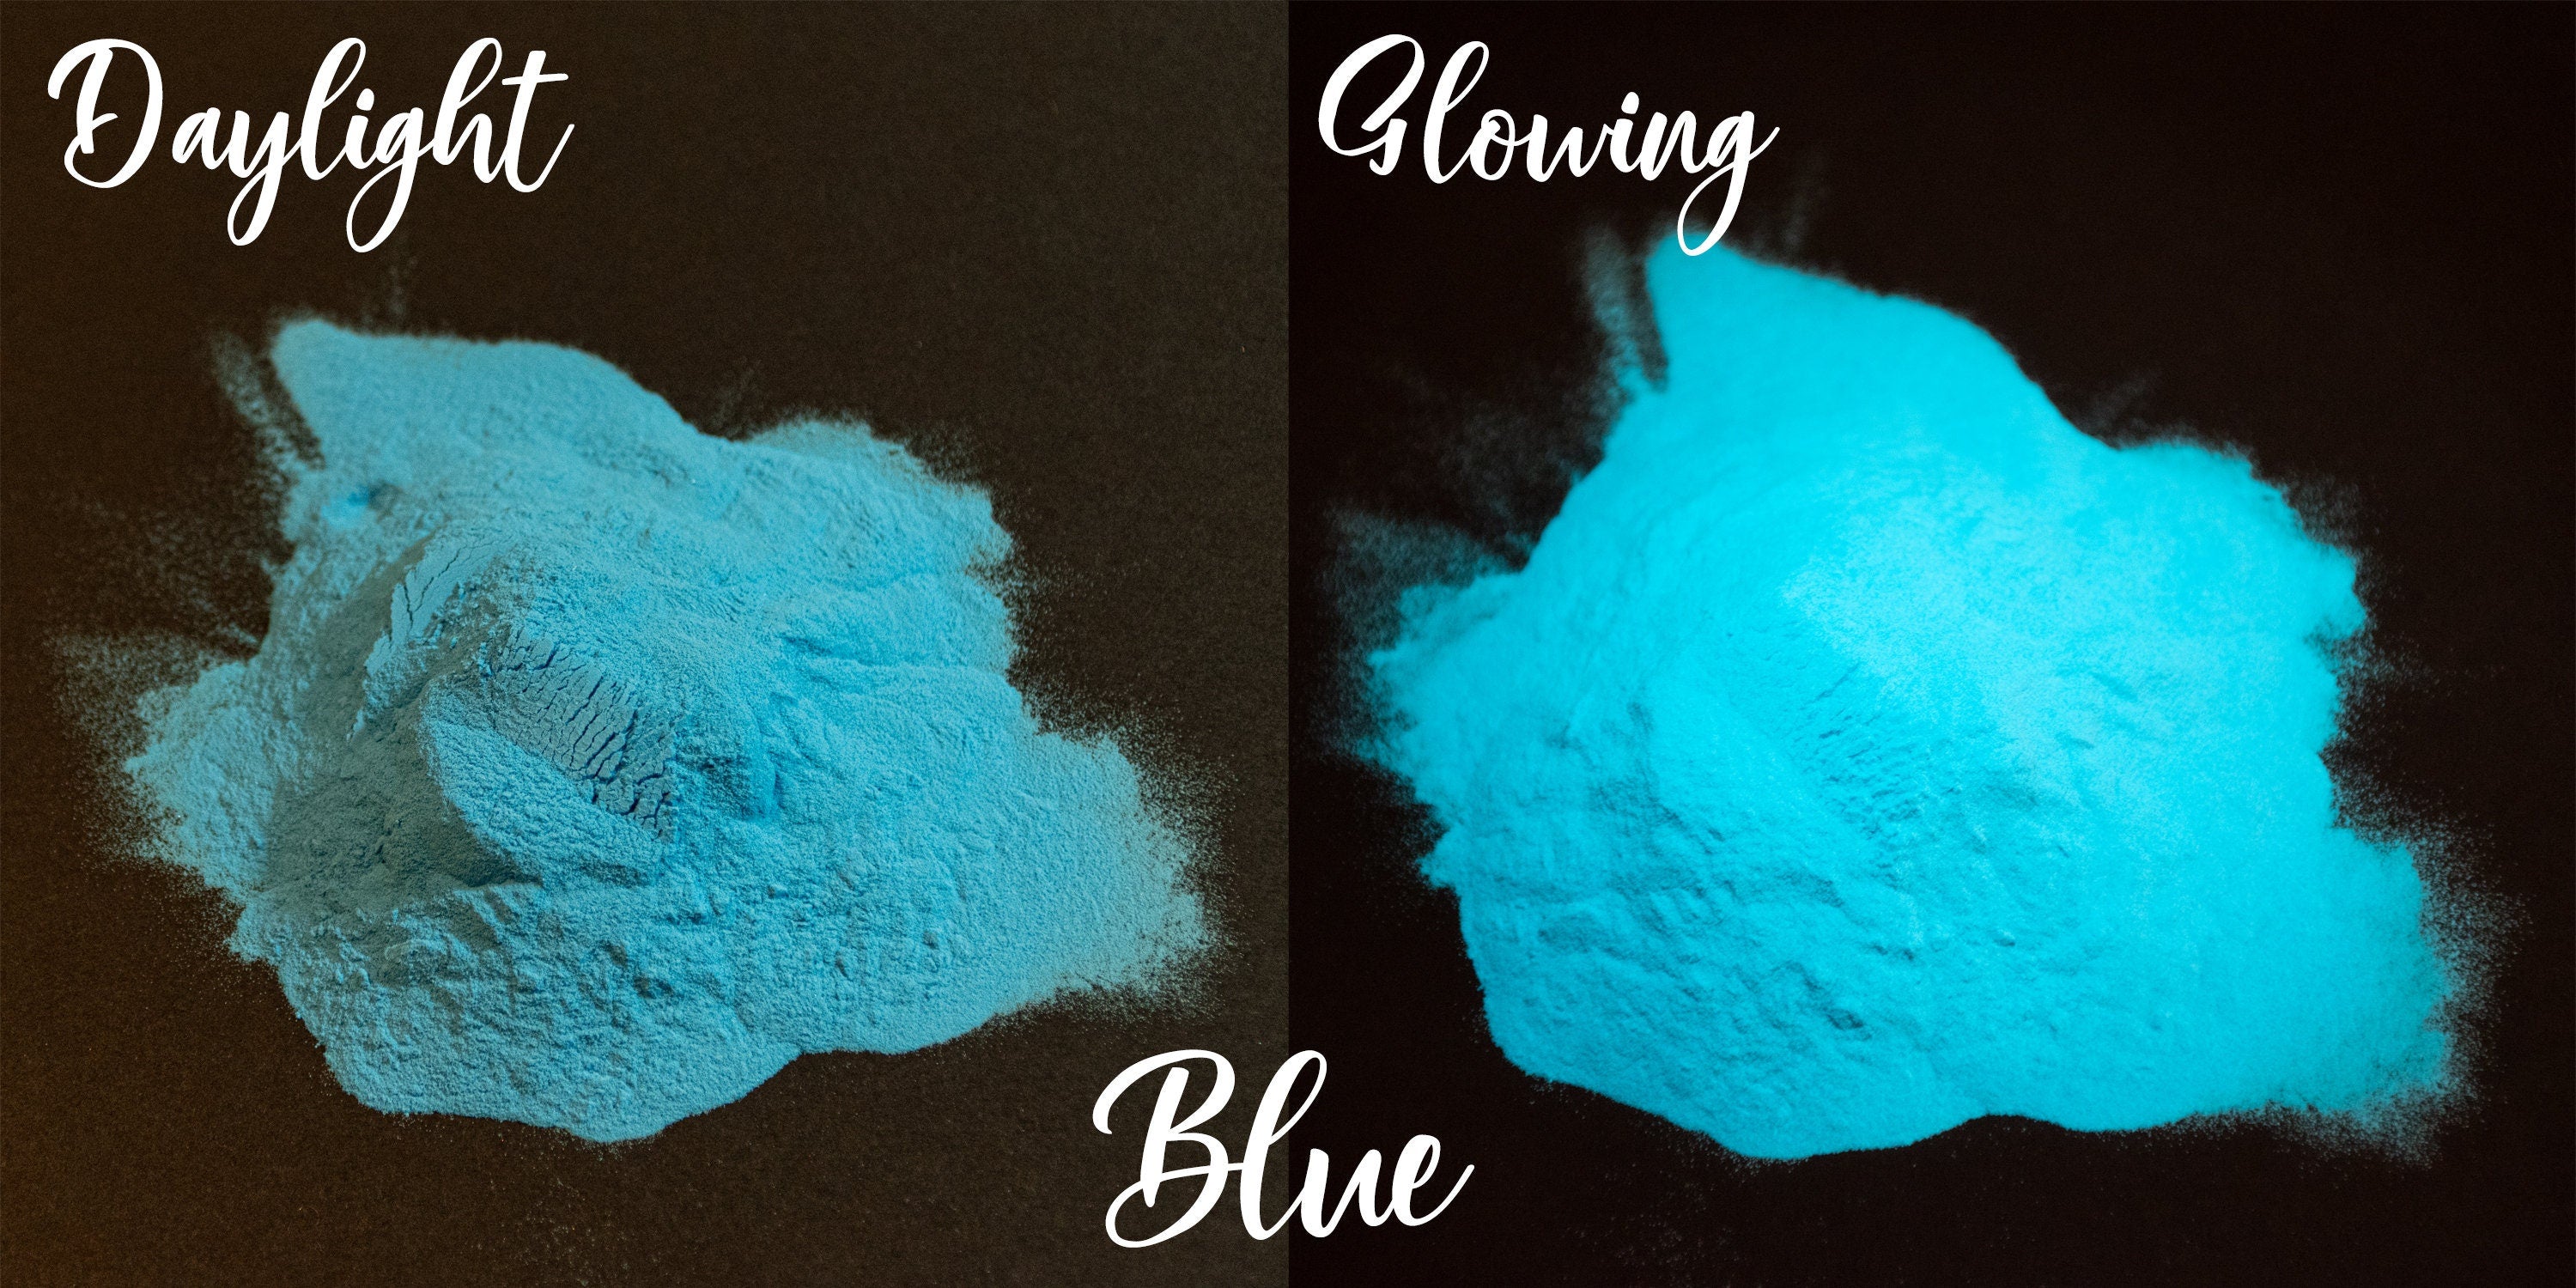 Blue Glow in the Dark - Blue in Daylight - Pigment Powder